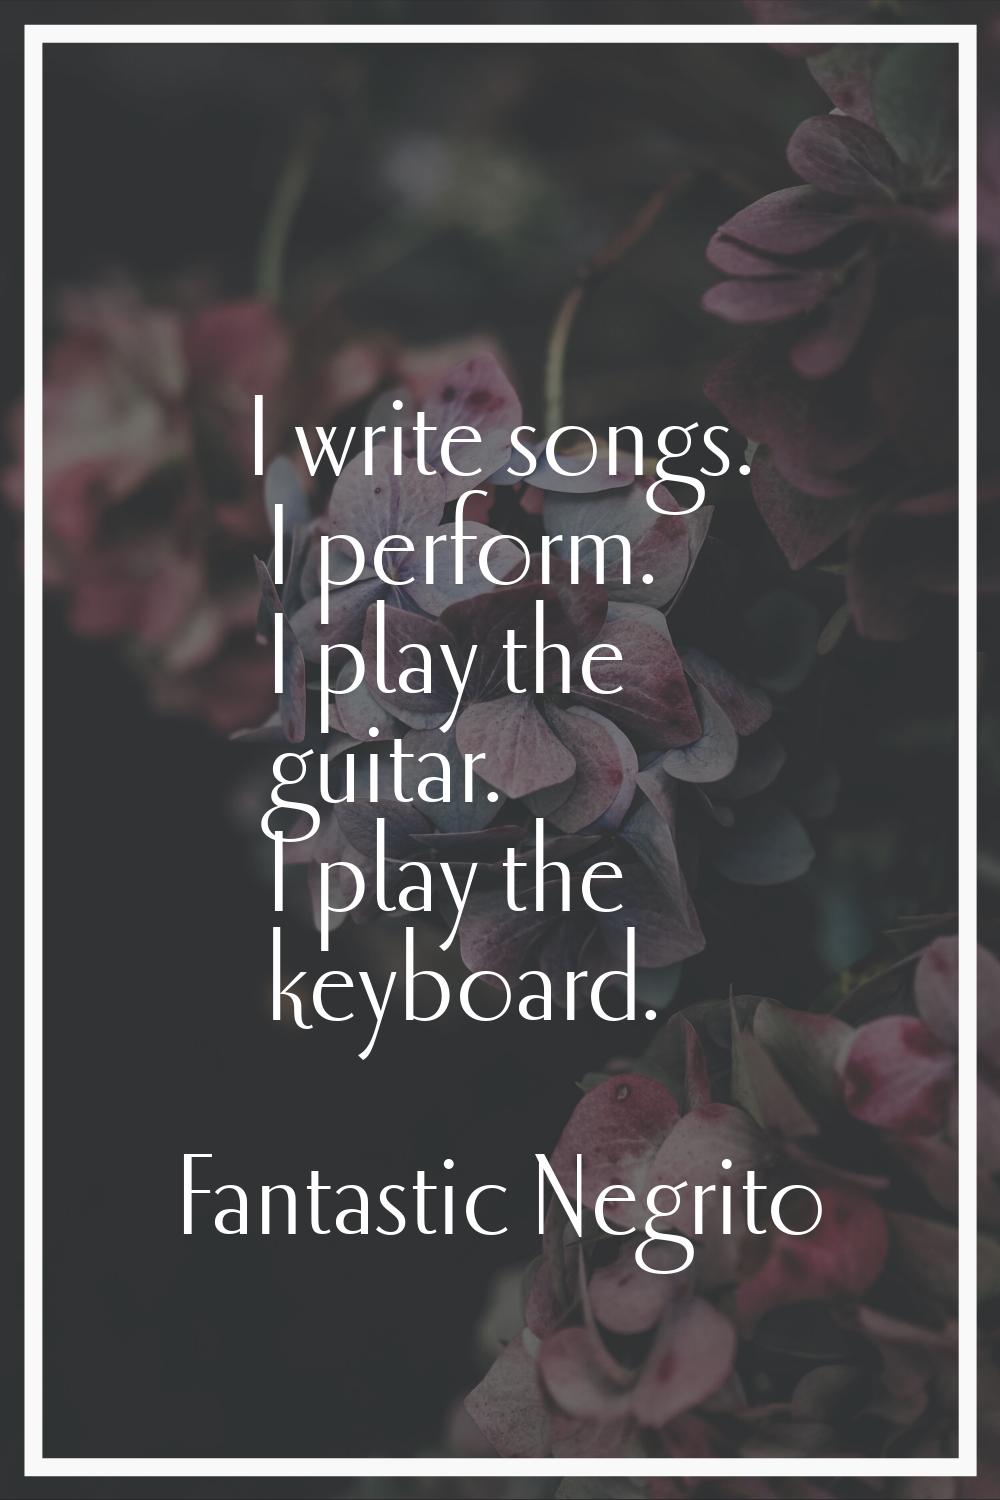 I write songs. I perform. I play the guitar. I play the keyboard.